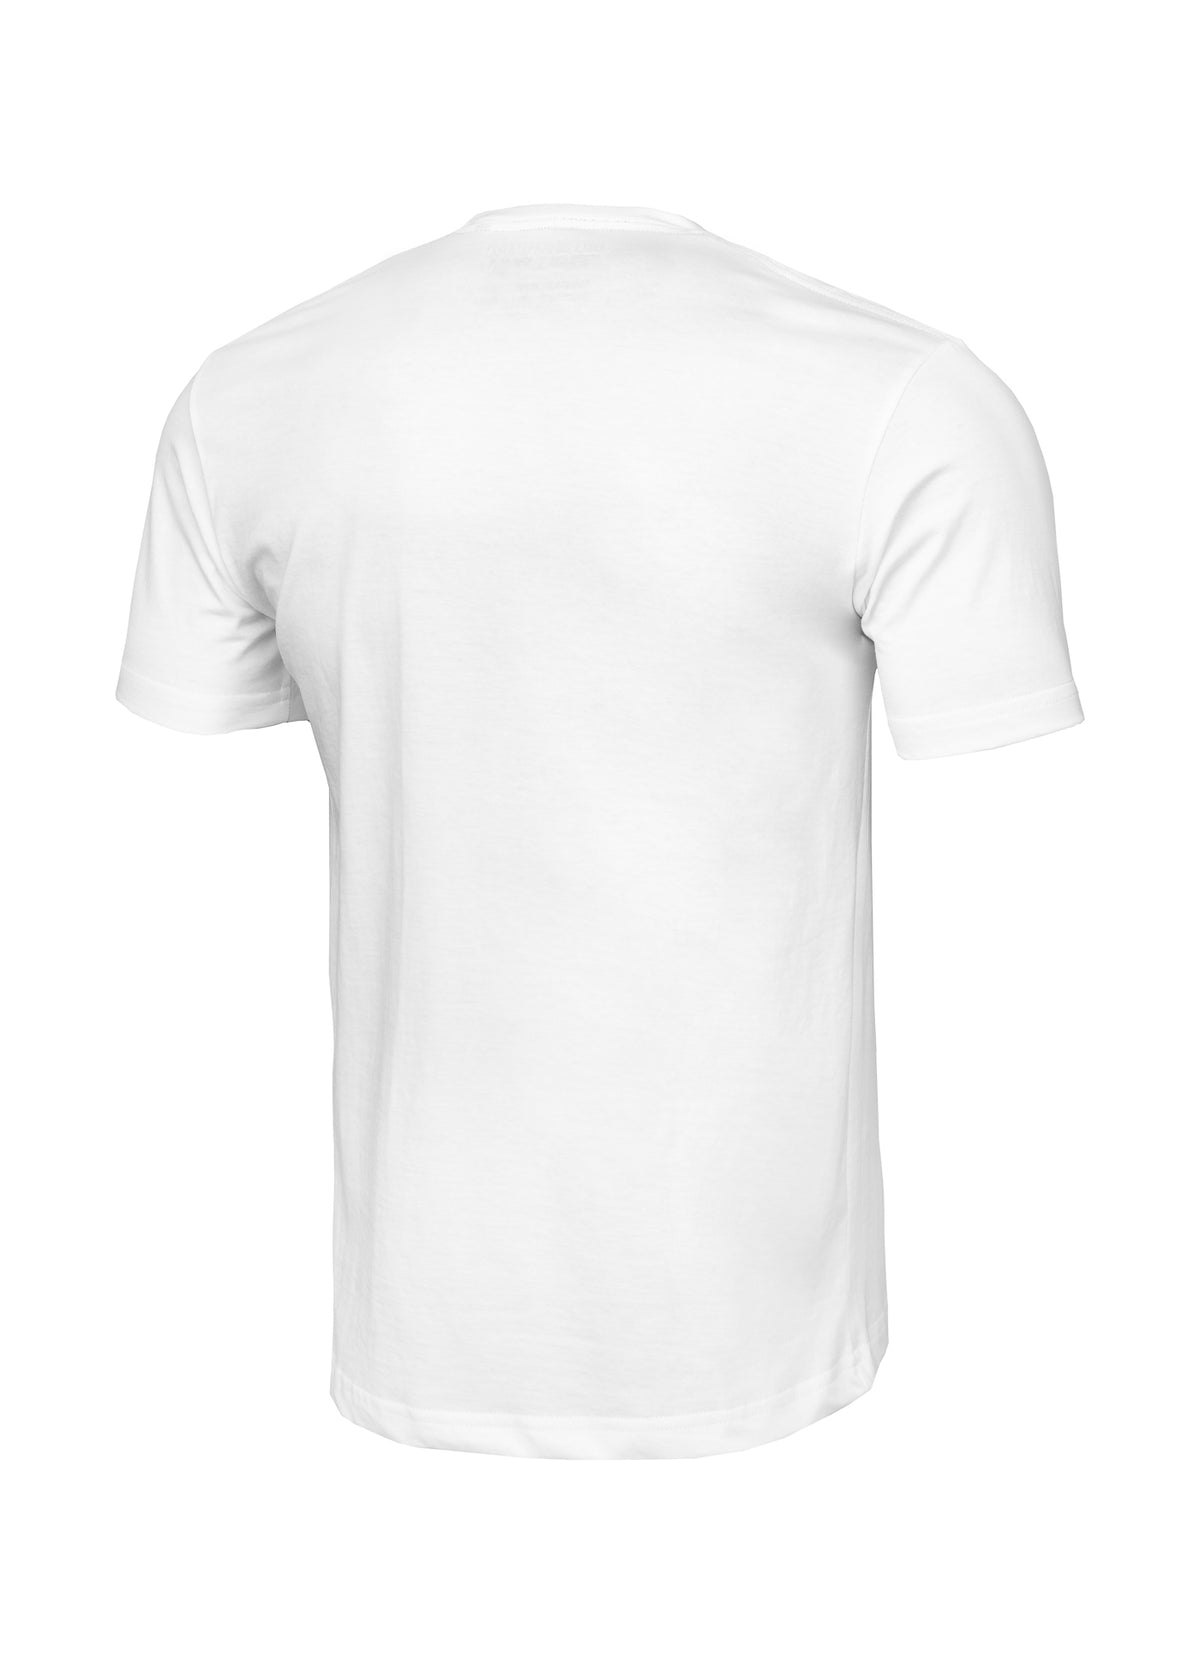 SMALL LOGO 21 White T-Shirt.